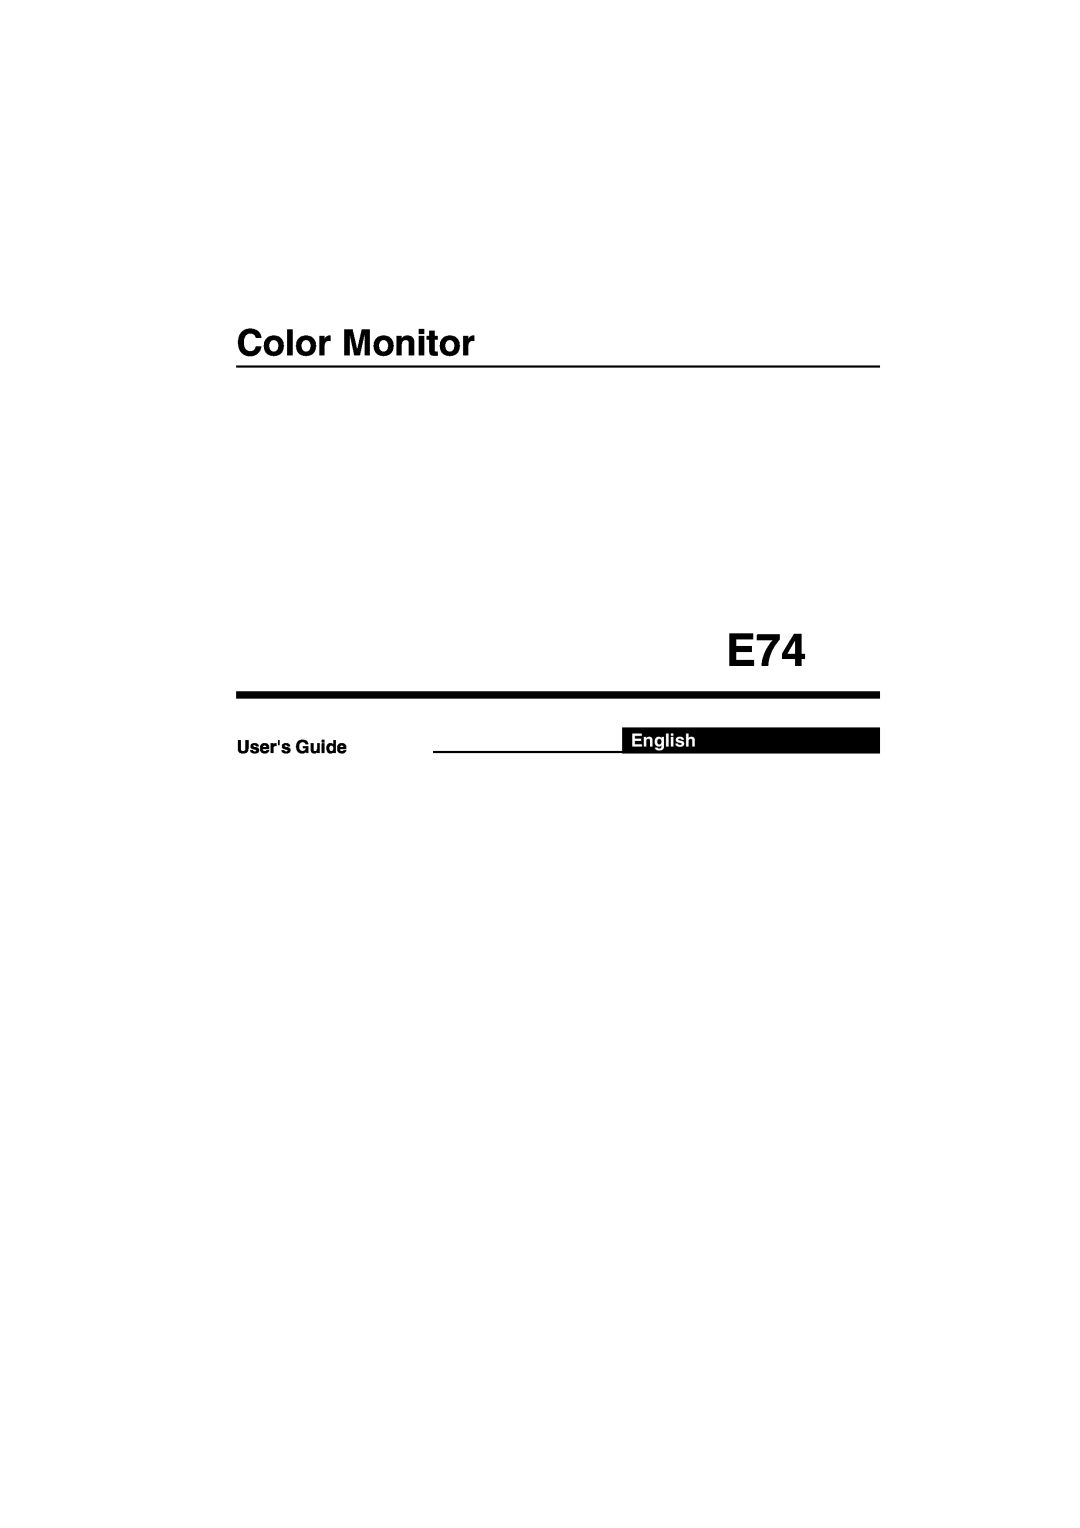 Lenovo E74 manual Color Monitor, English 